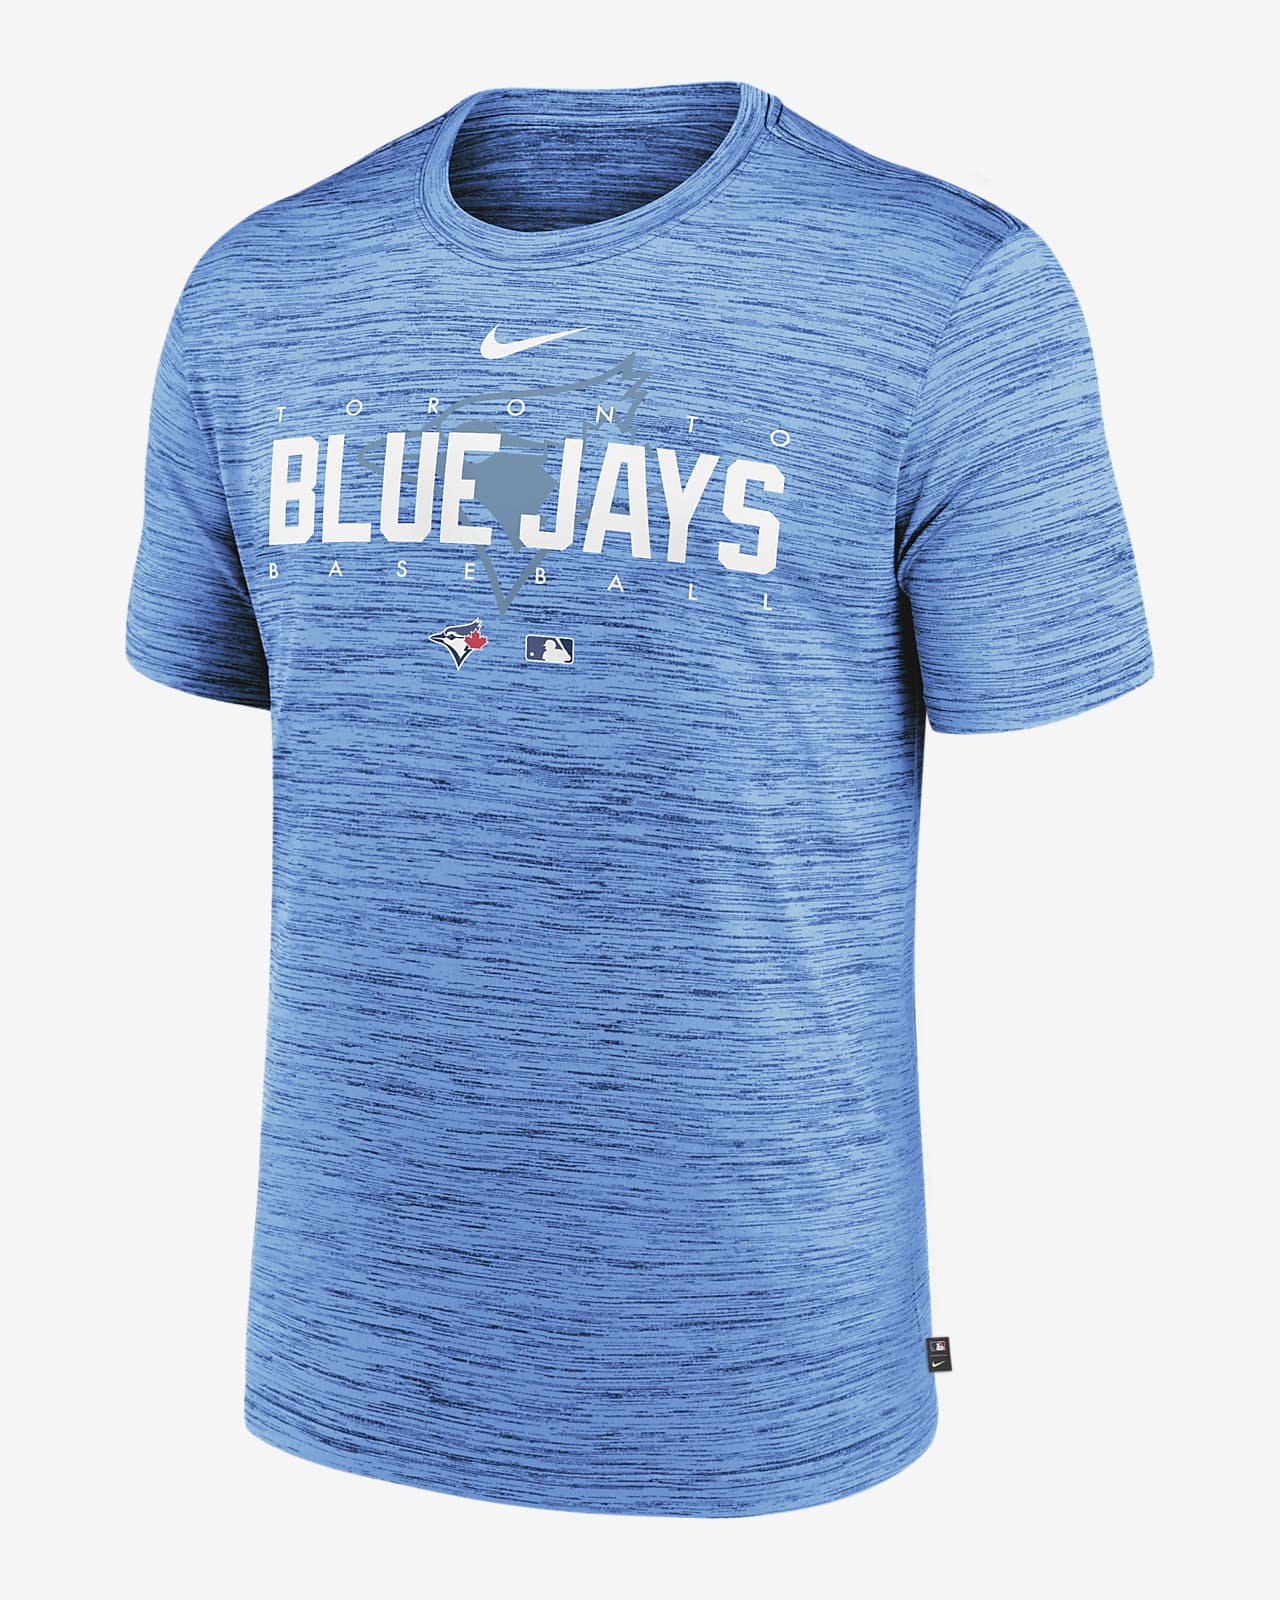 Nike Velocity Team (MLB Toronto Blue Jays) Men's T-Shirt